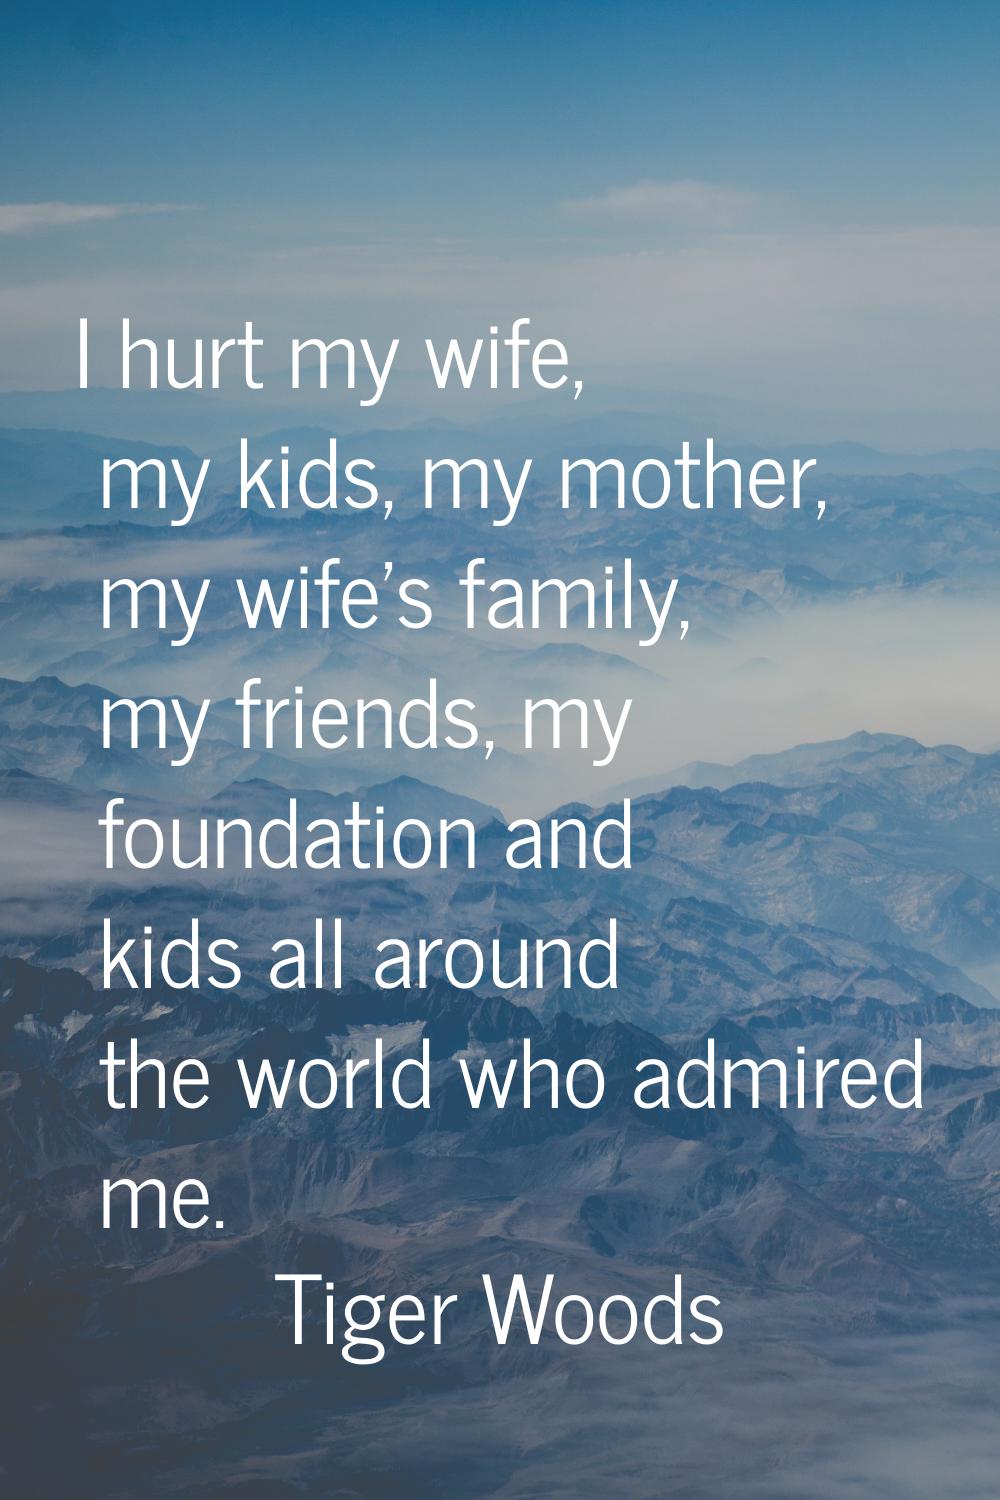 I hurt my wife, my kids, my mother, my wife's family, my friends, my foundation and kids all around